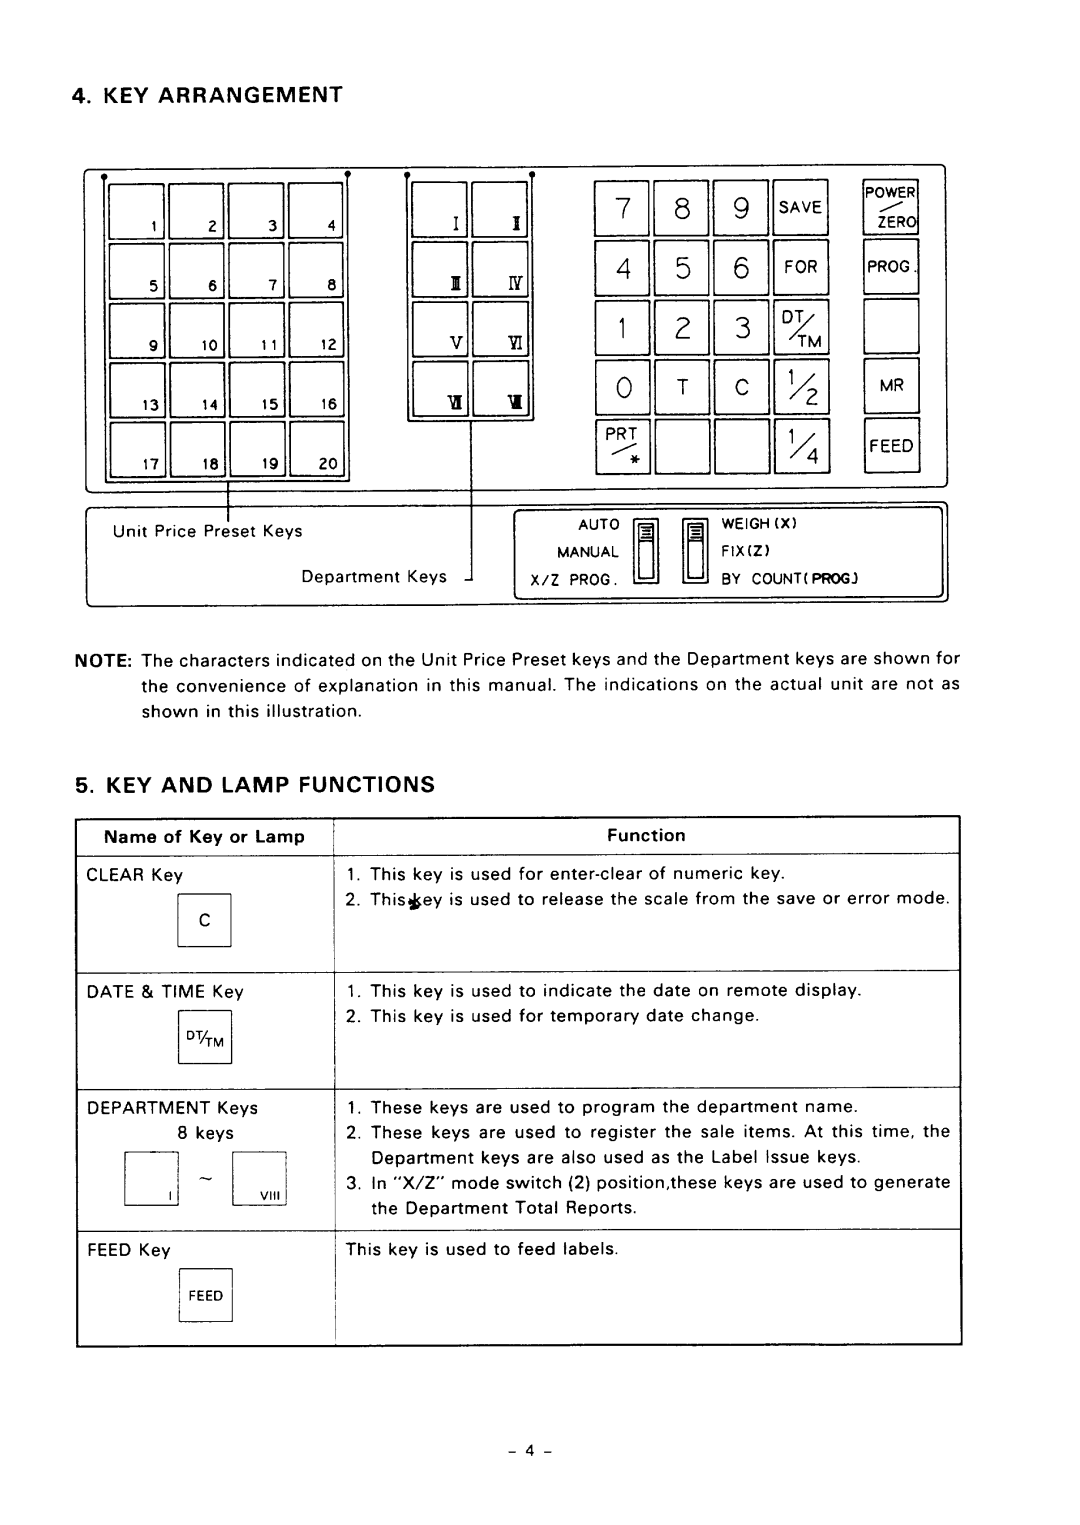 Toshiba SL57 SERIES owner manual Key Arrangement, Key And Lamp Functions, Name of Key or Lamp 